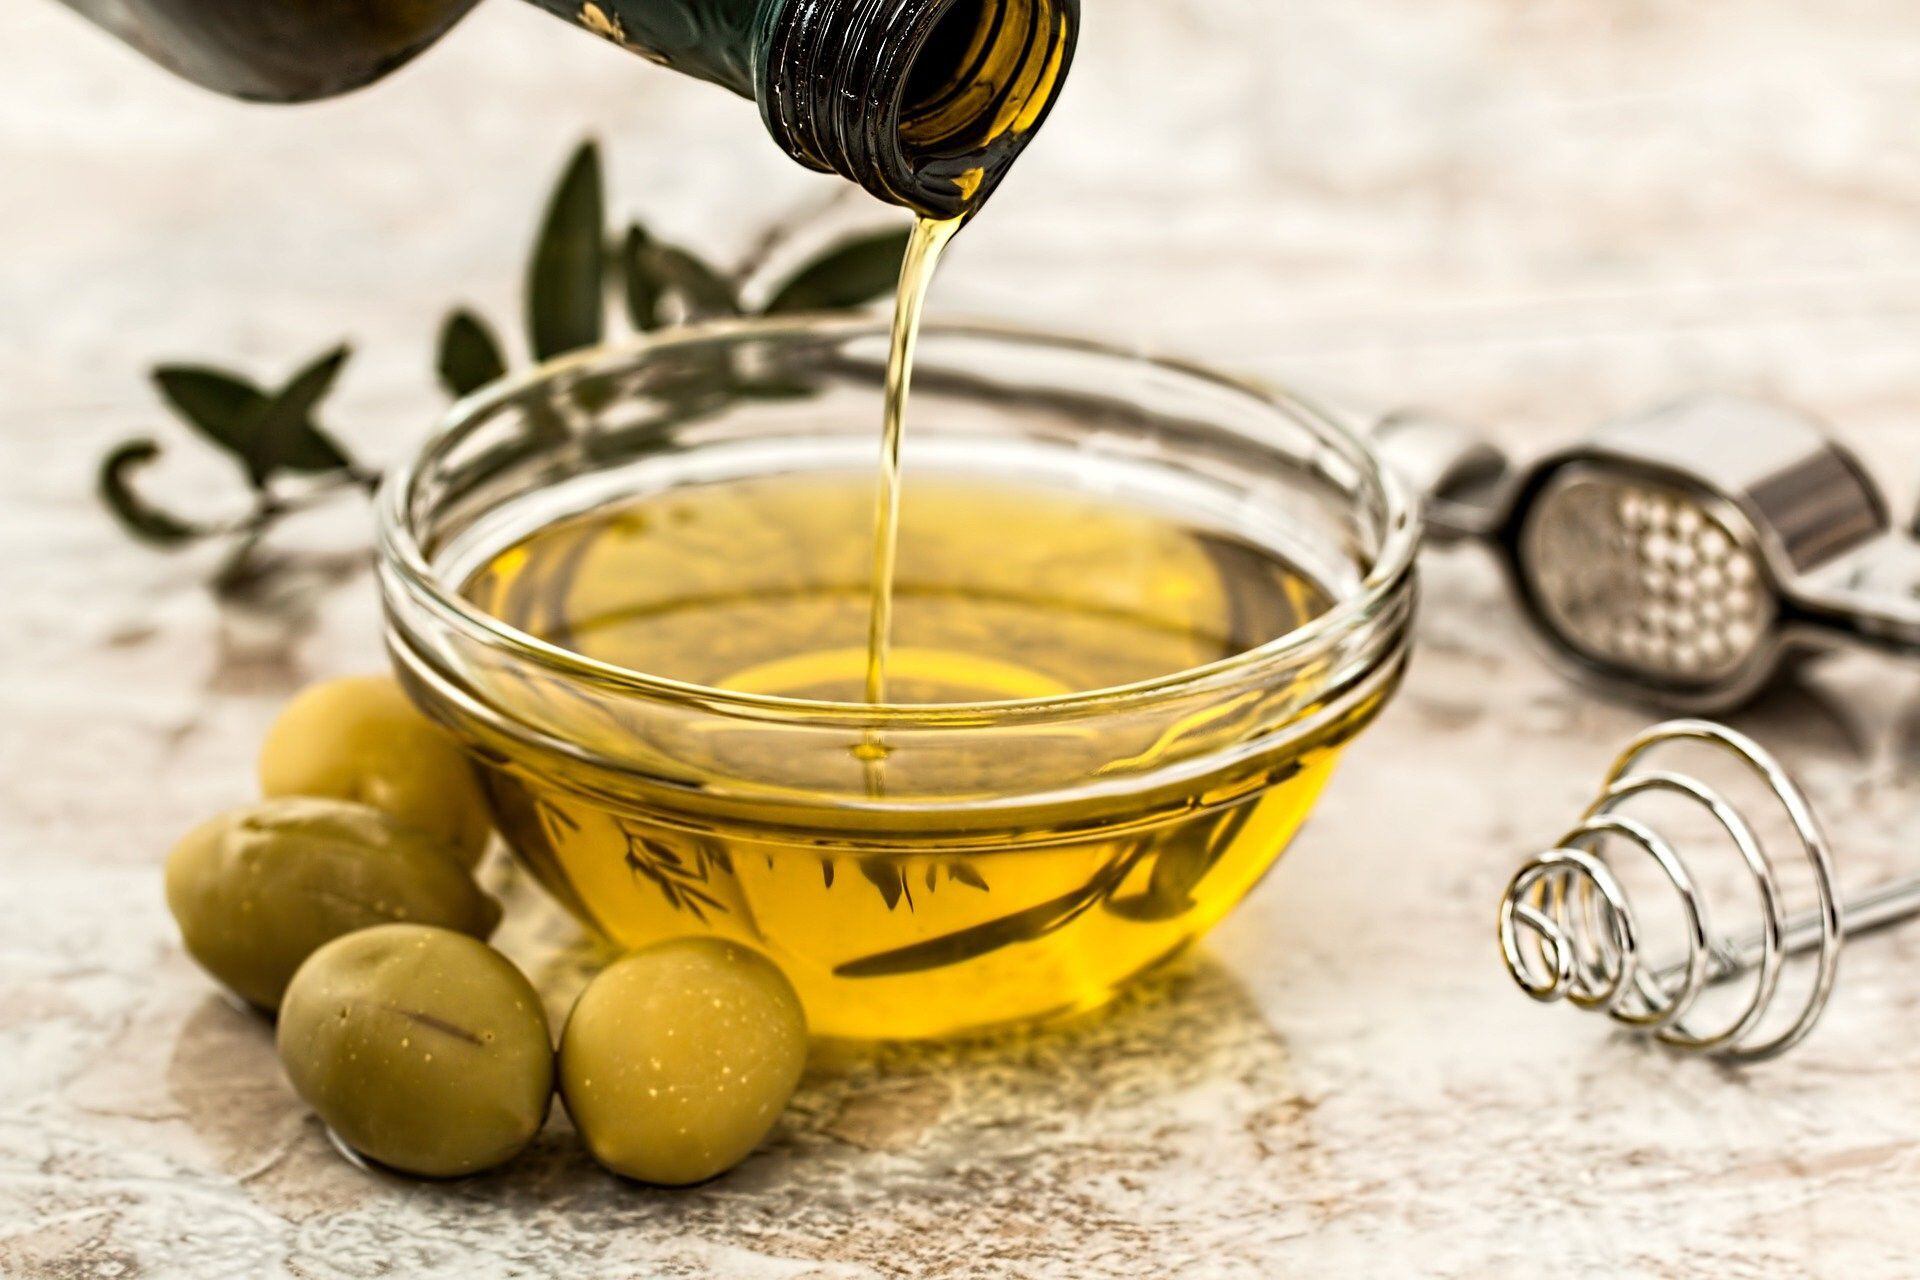 La ANMAT ordenó quitar de la venta una marca de aceite de oliva (Getty Images) 